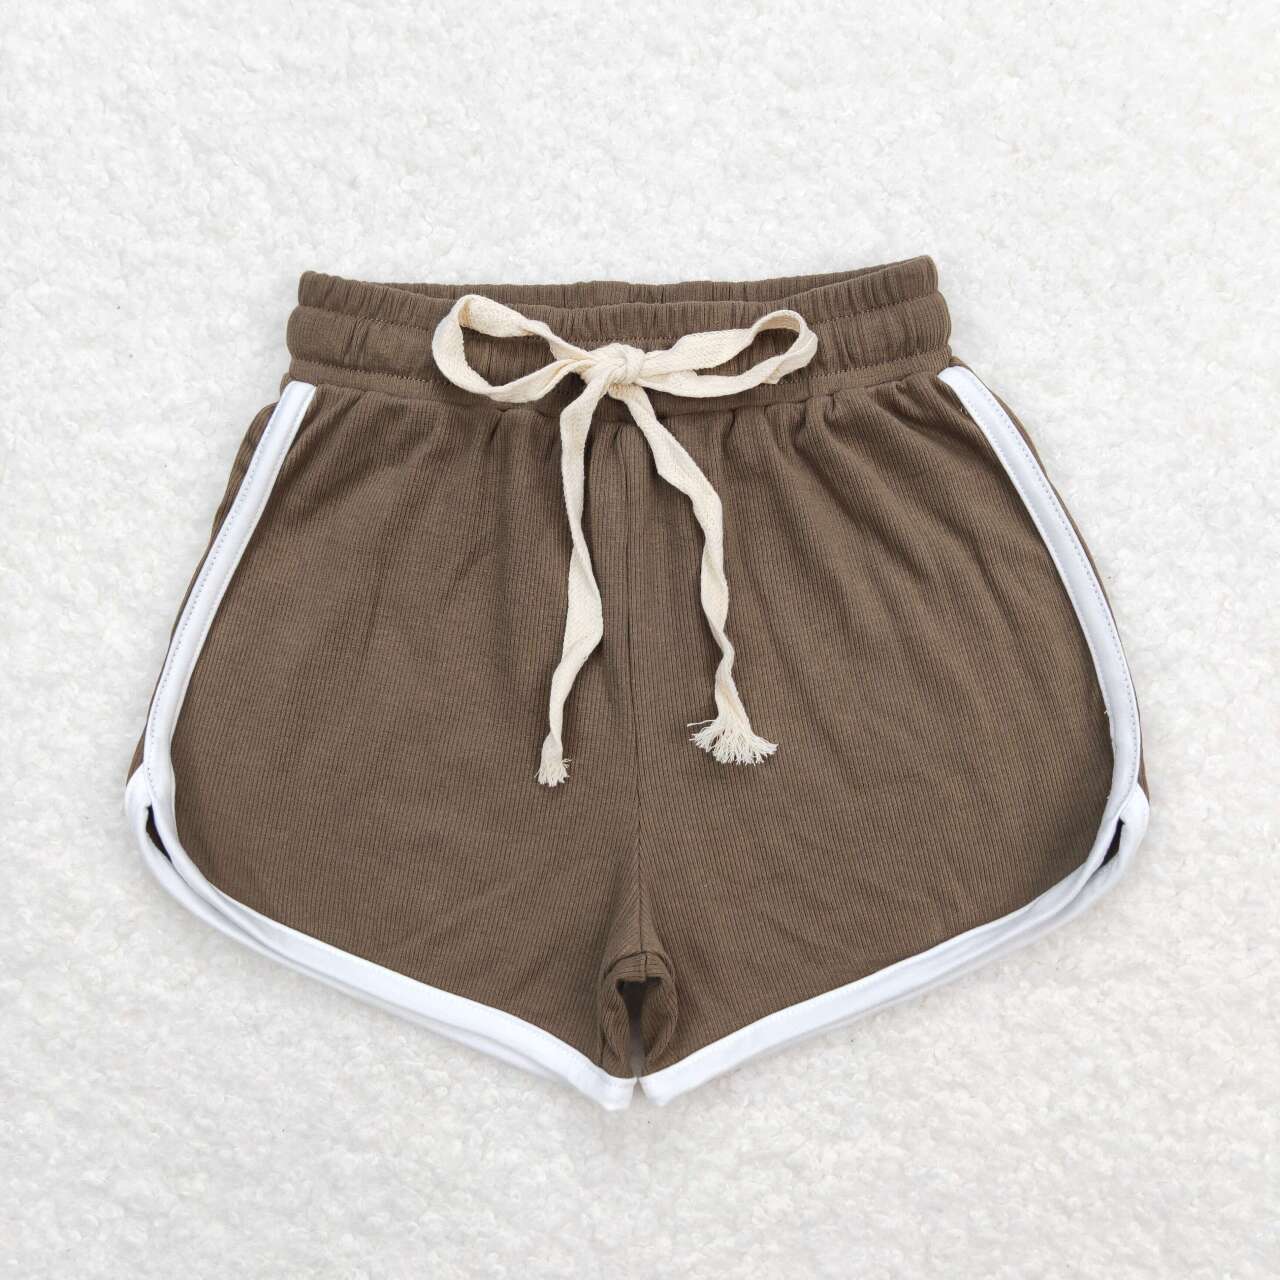 SS0314 Dark brown shorts